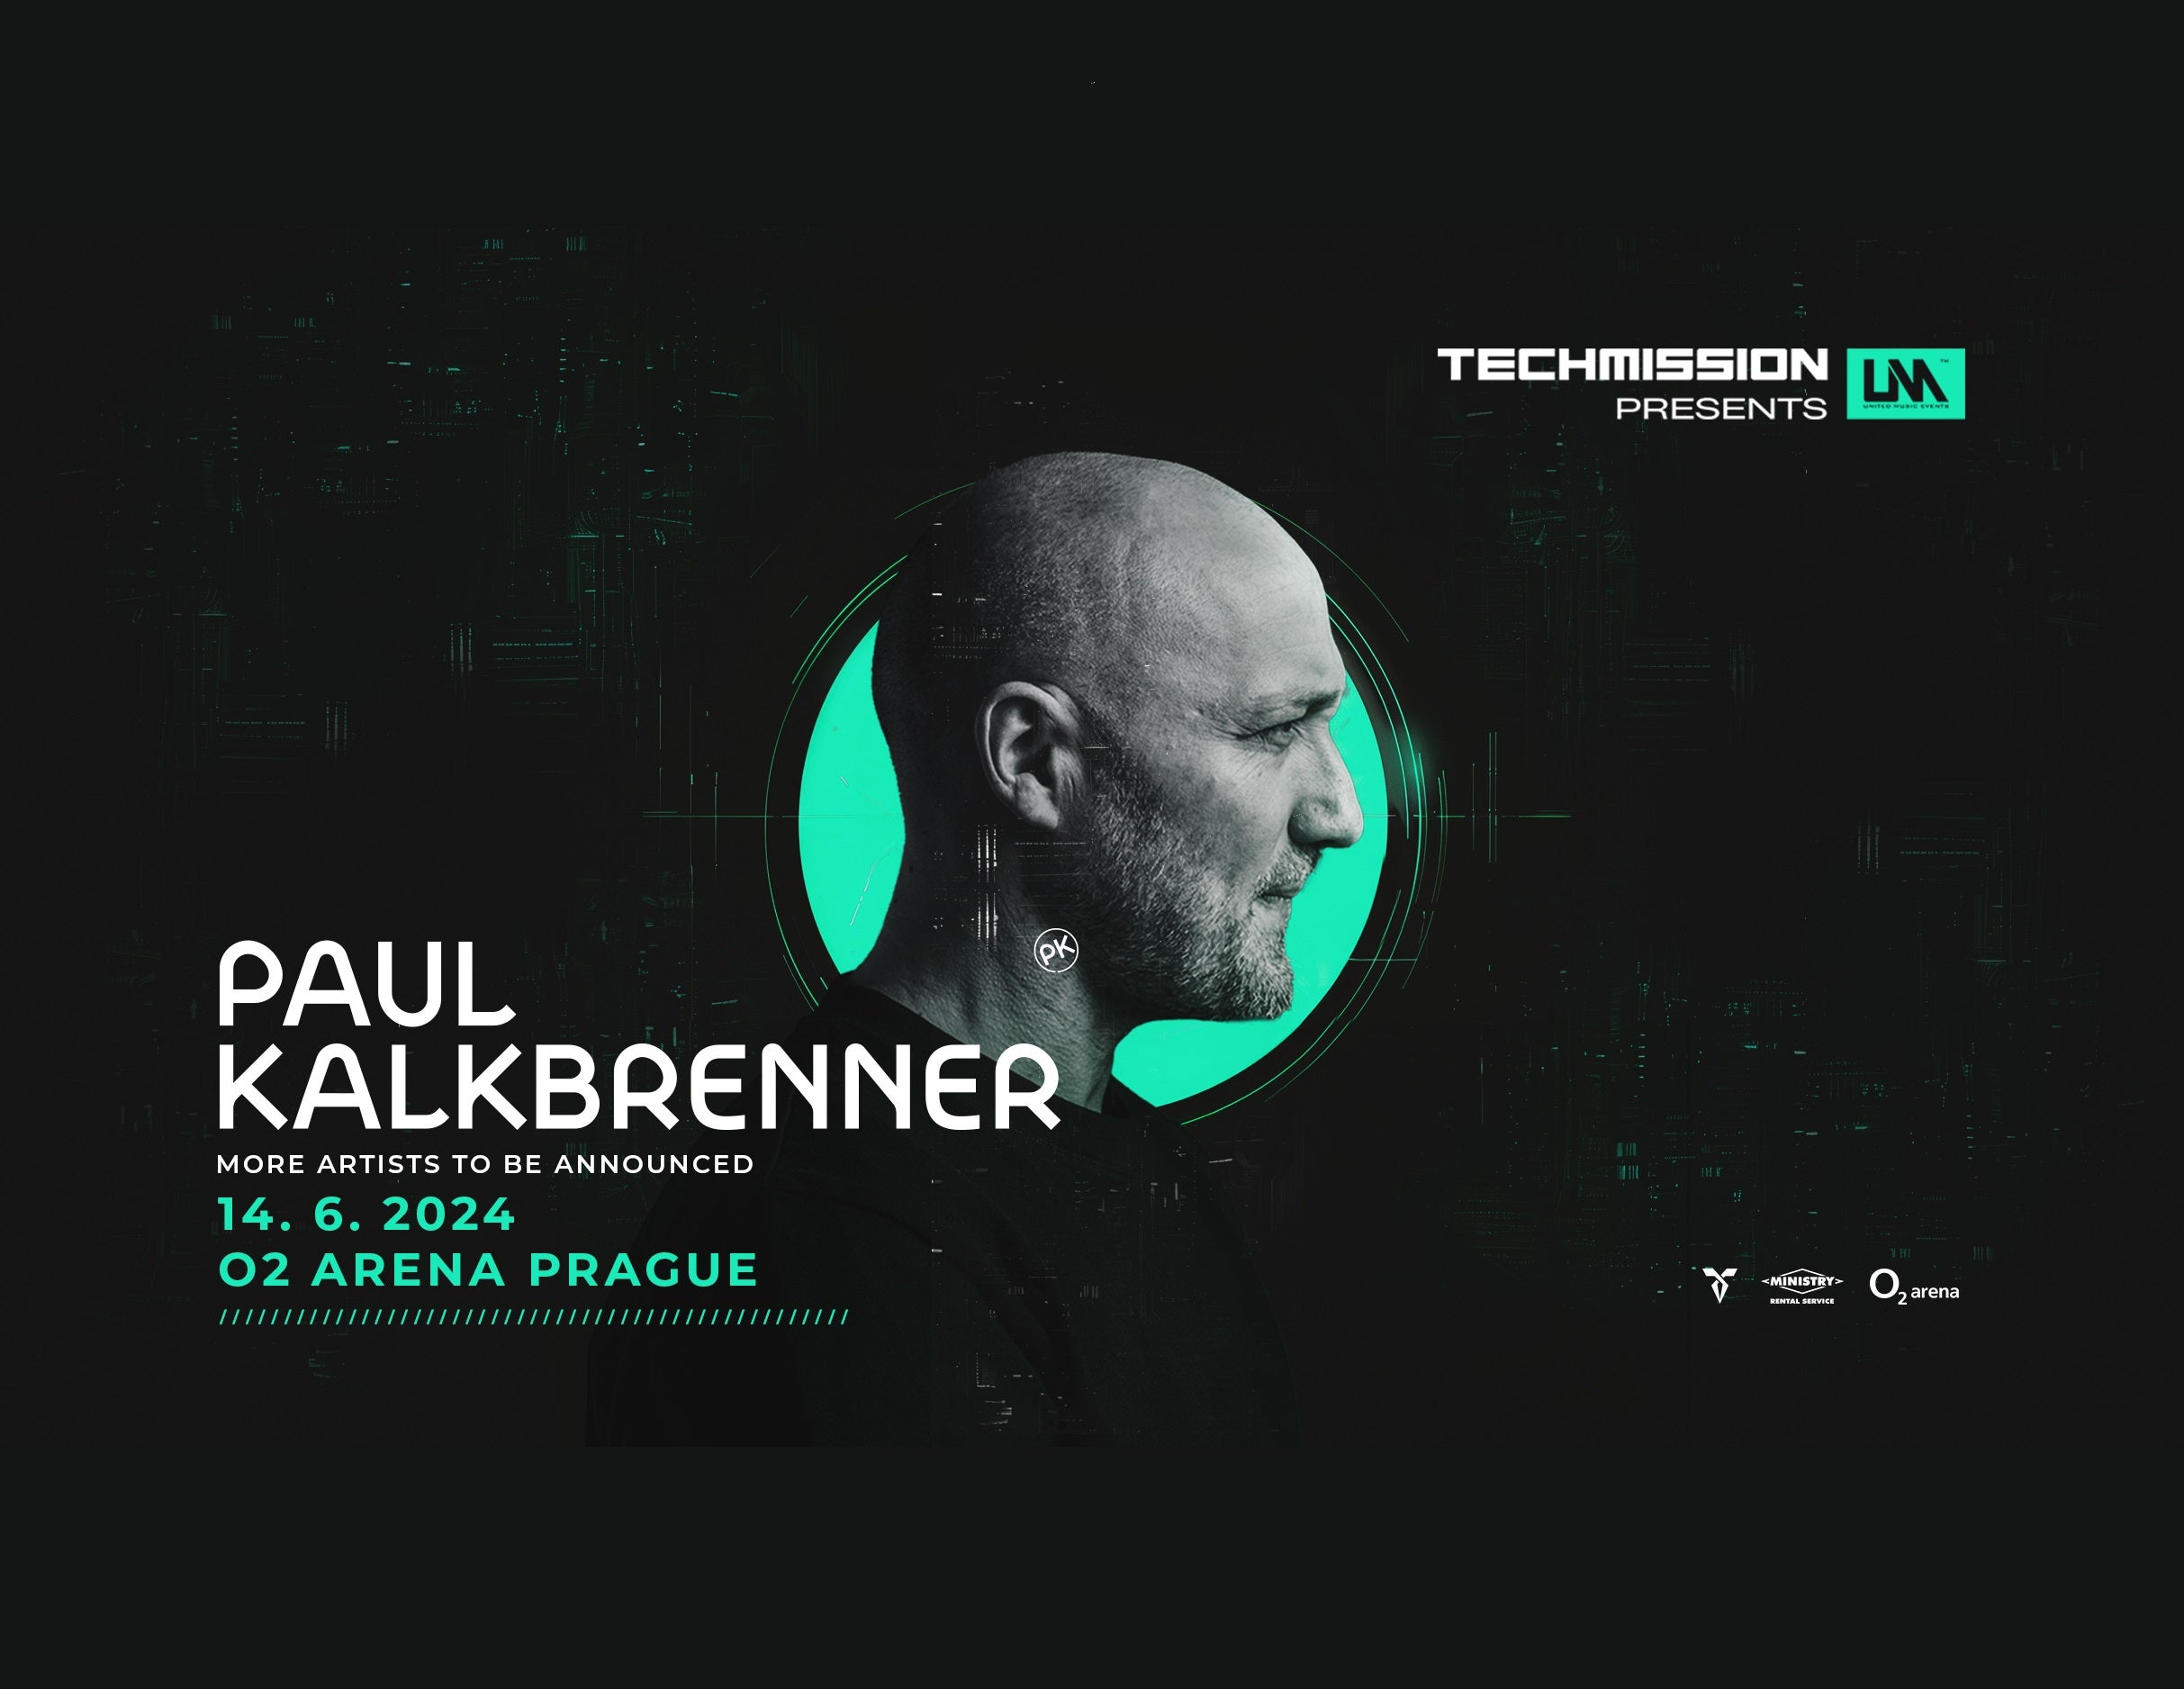 COMBO TICKET: Paul Kalkbrenner + Transmission Festival (14.-15.6.2024)- Praha O2 arena -O2 arena Praha 9 Českomoravská 2345/17a, Praha 9 19000